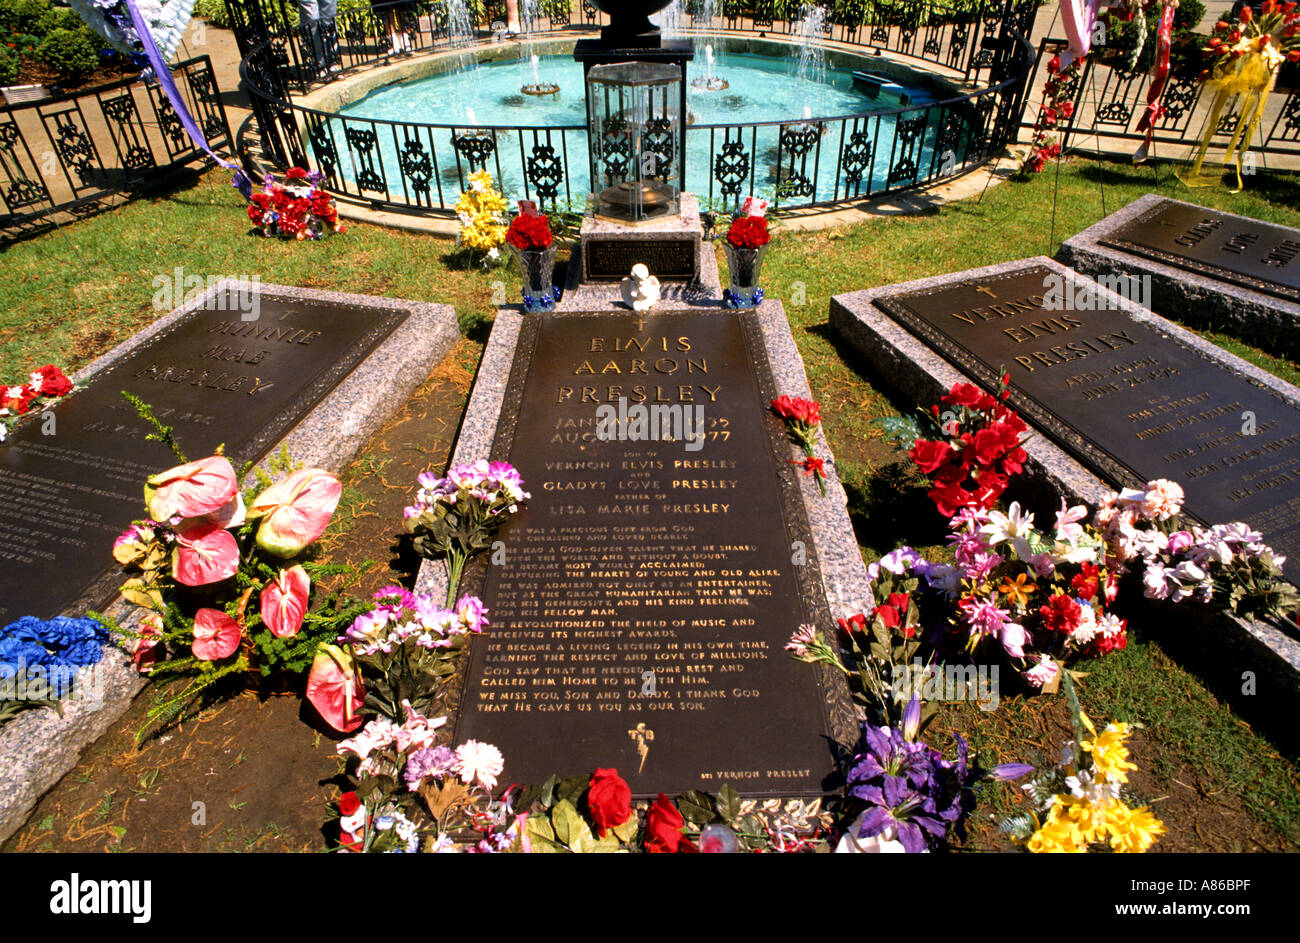 United States USA Tennessee Music Beale street Memphis Graceland Elvis Presley Graveyard Cemetery Stock Photo